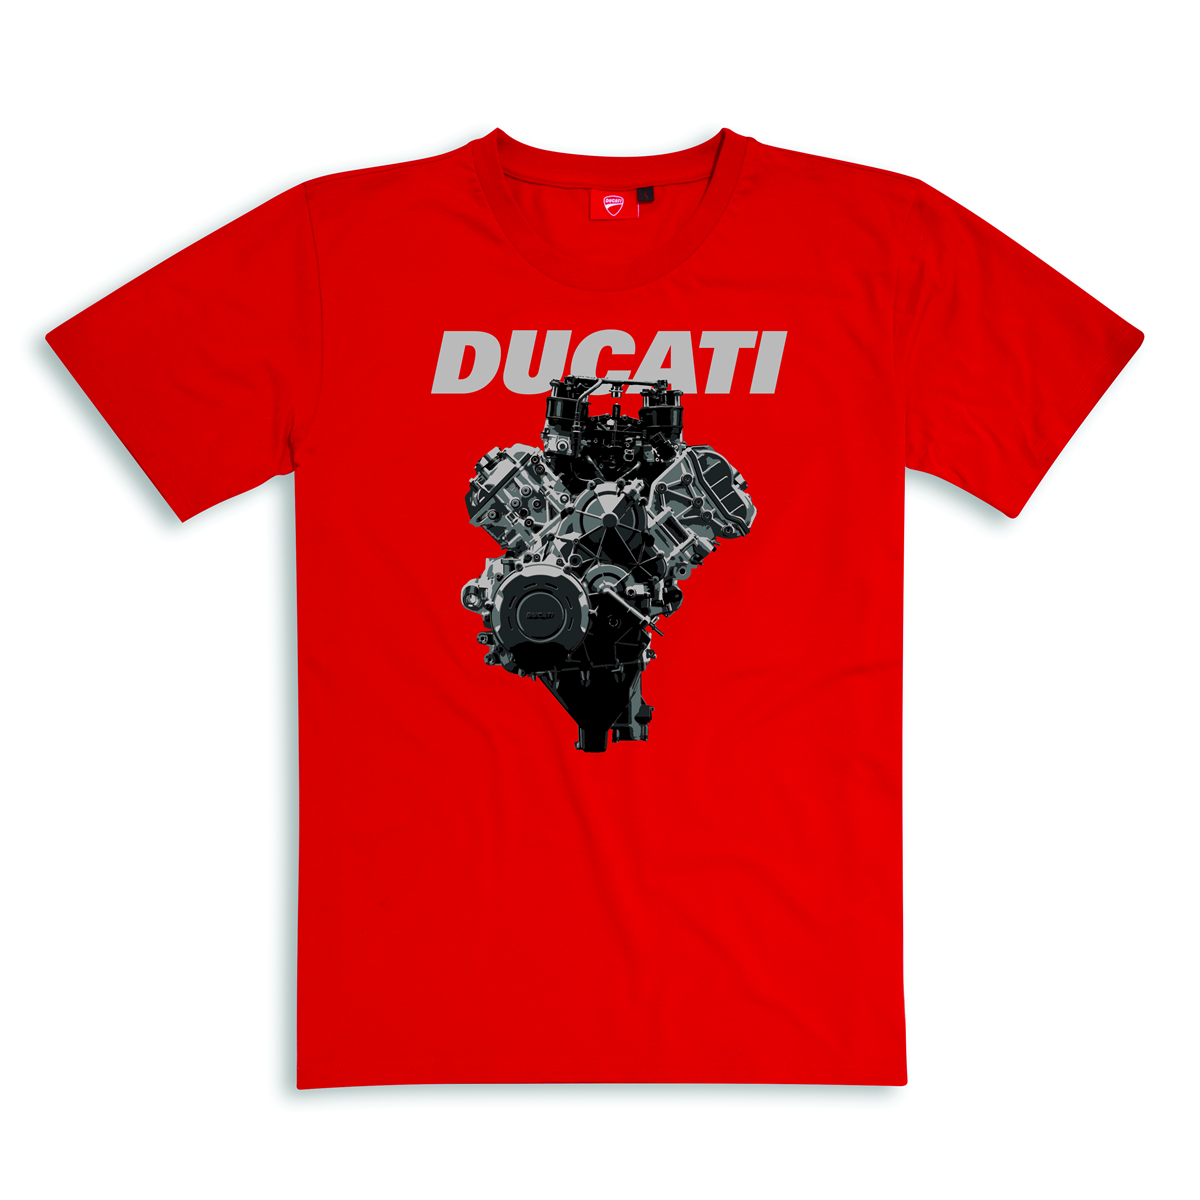 Ducati Desmo4 Men's Tee